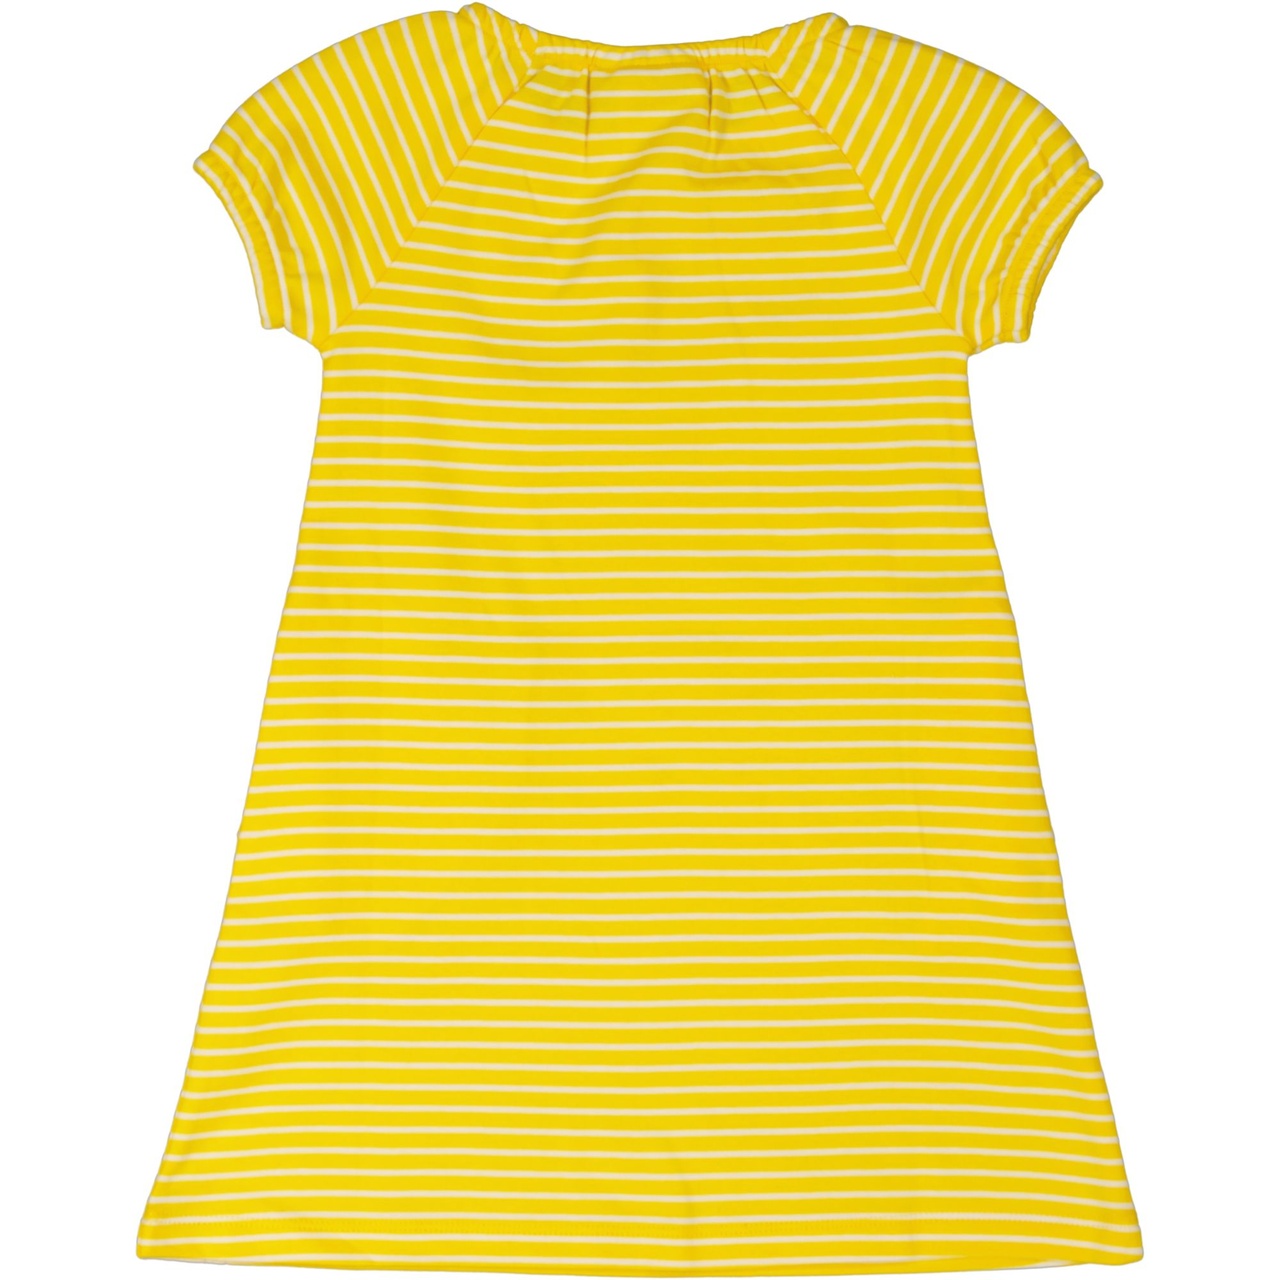 Singoalla dress Yellow/white  110/116